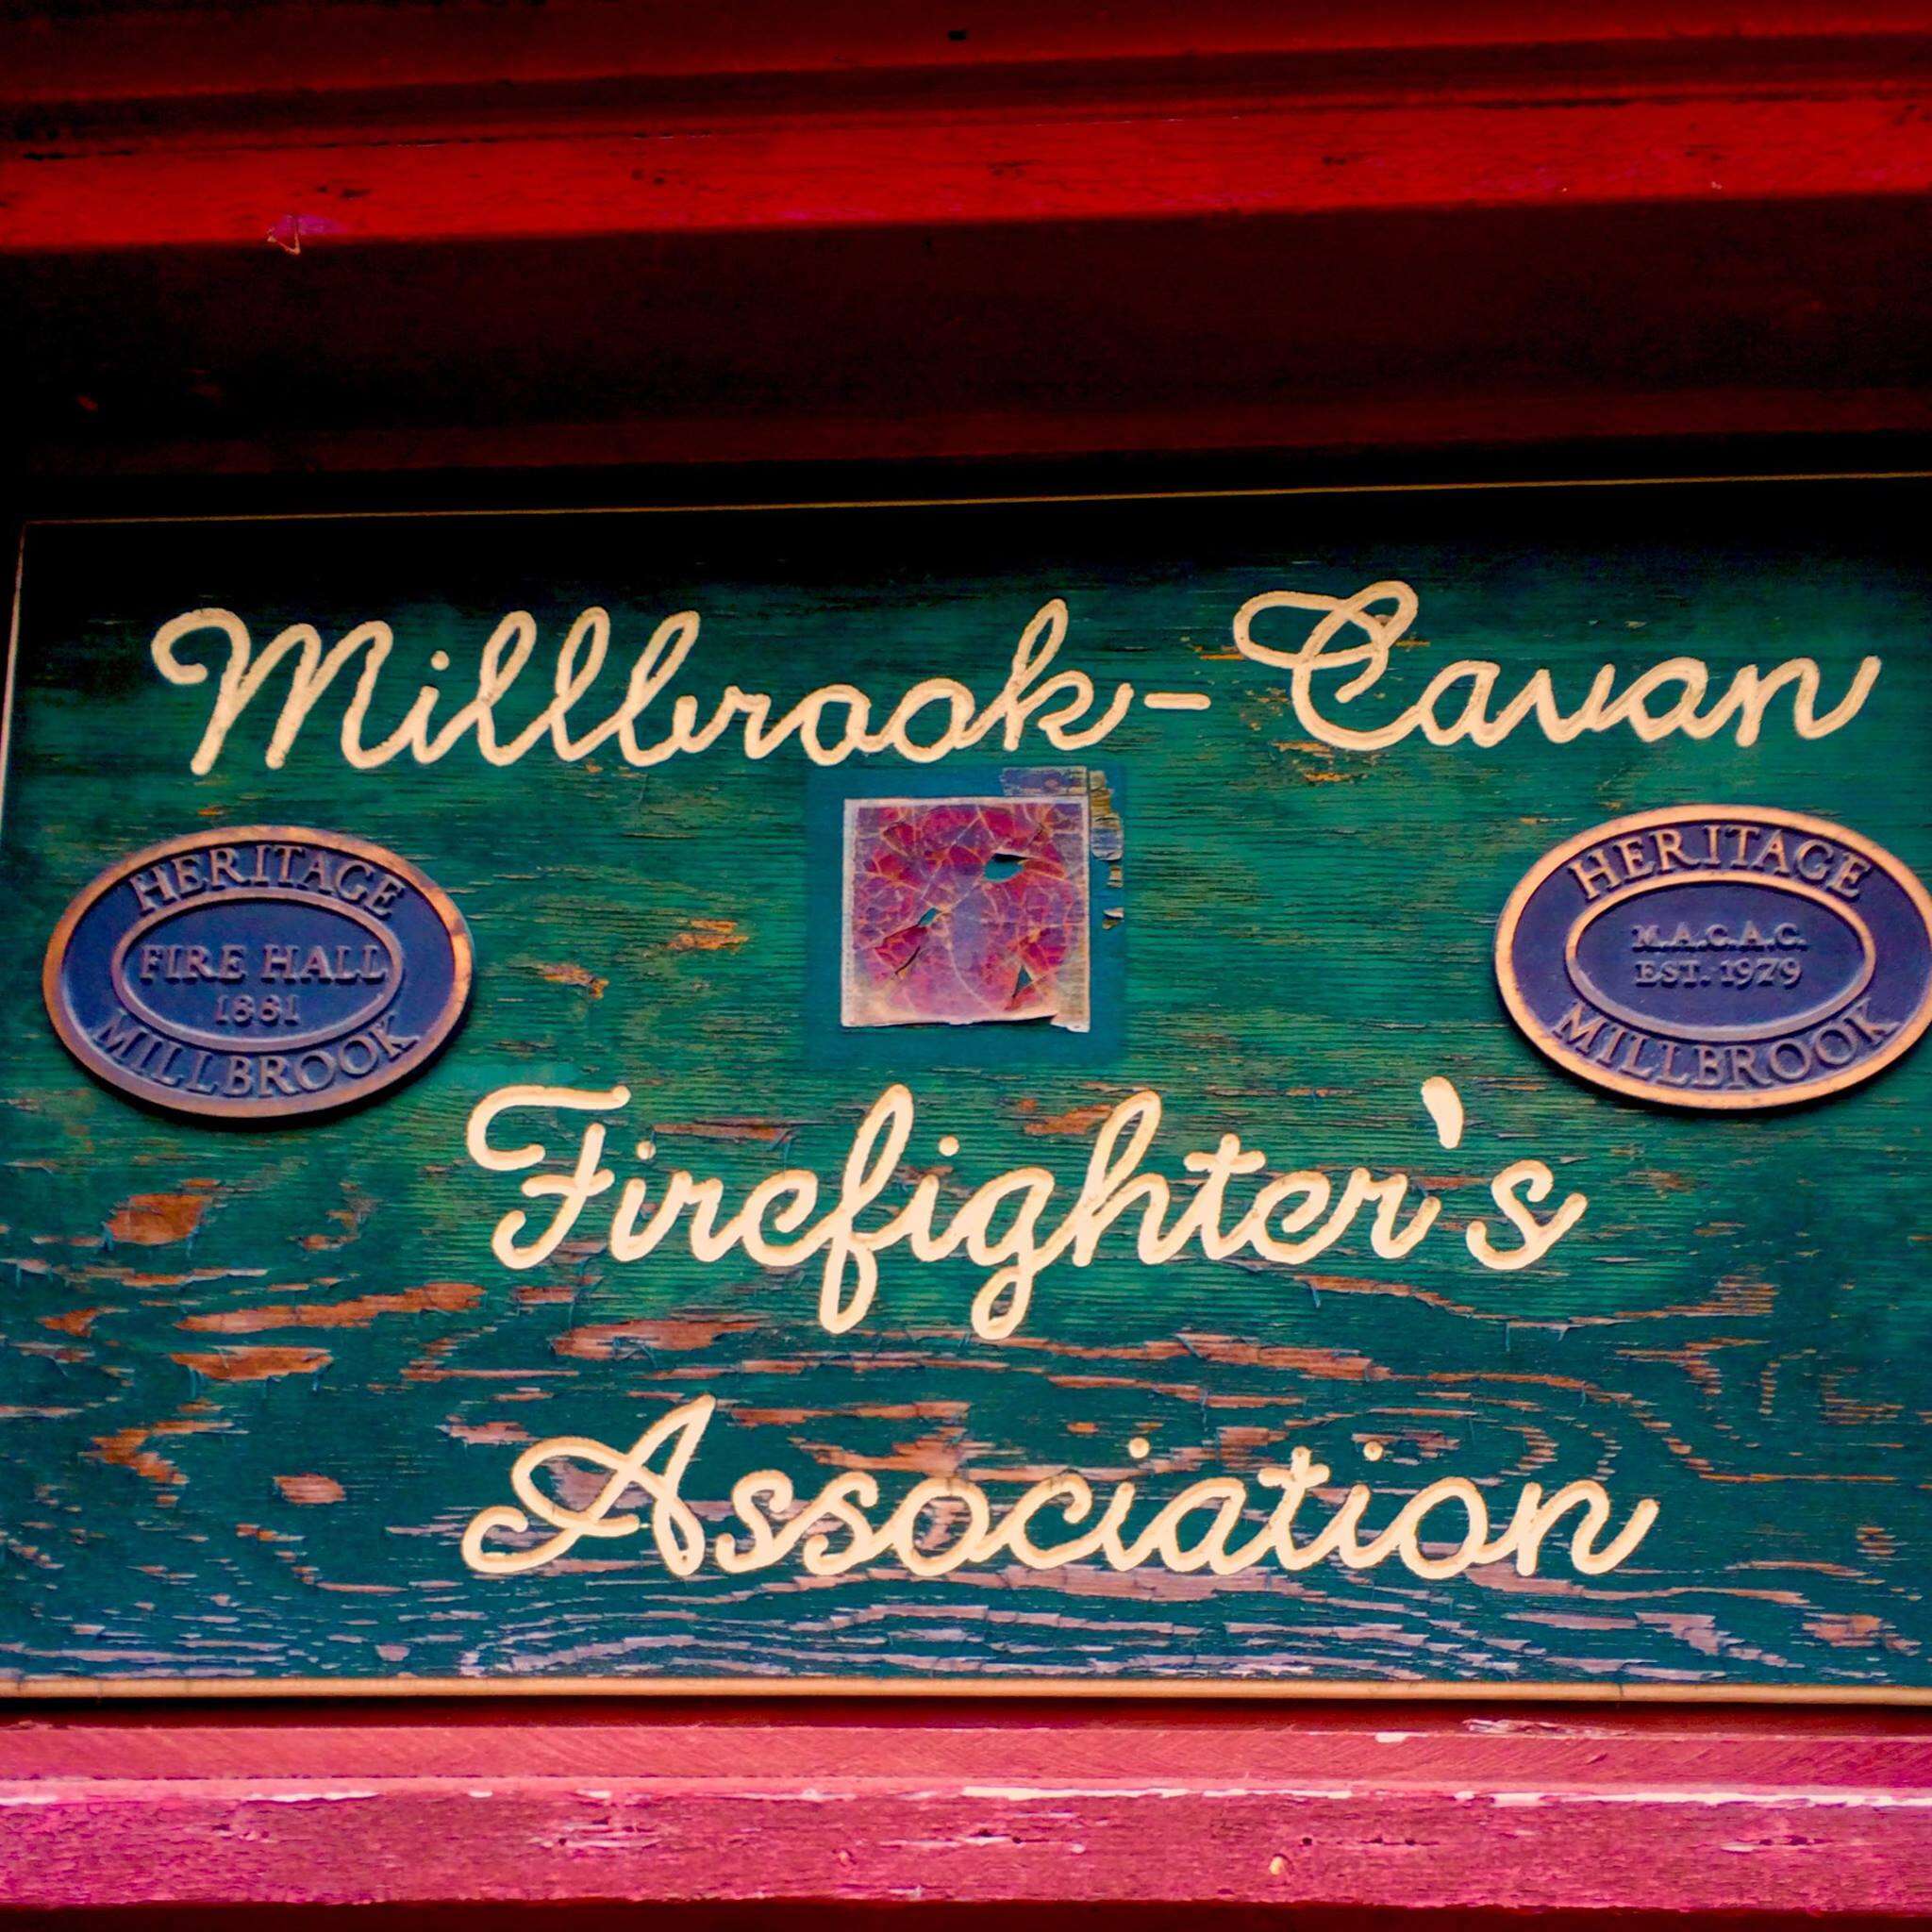 Millbrook and Cavan Firefighters Association